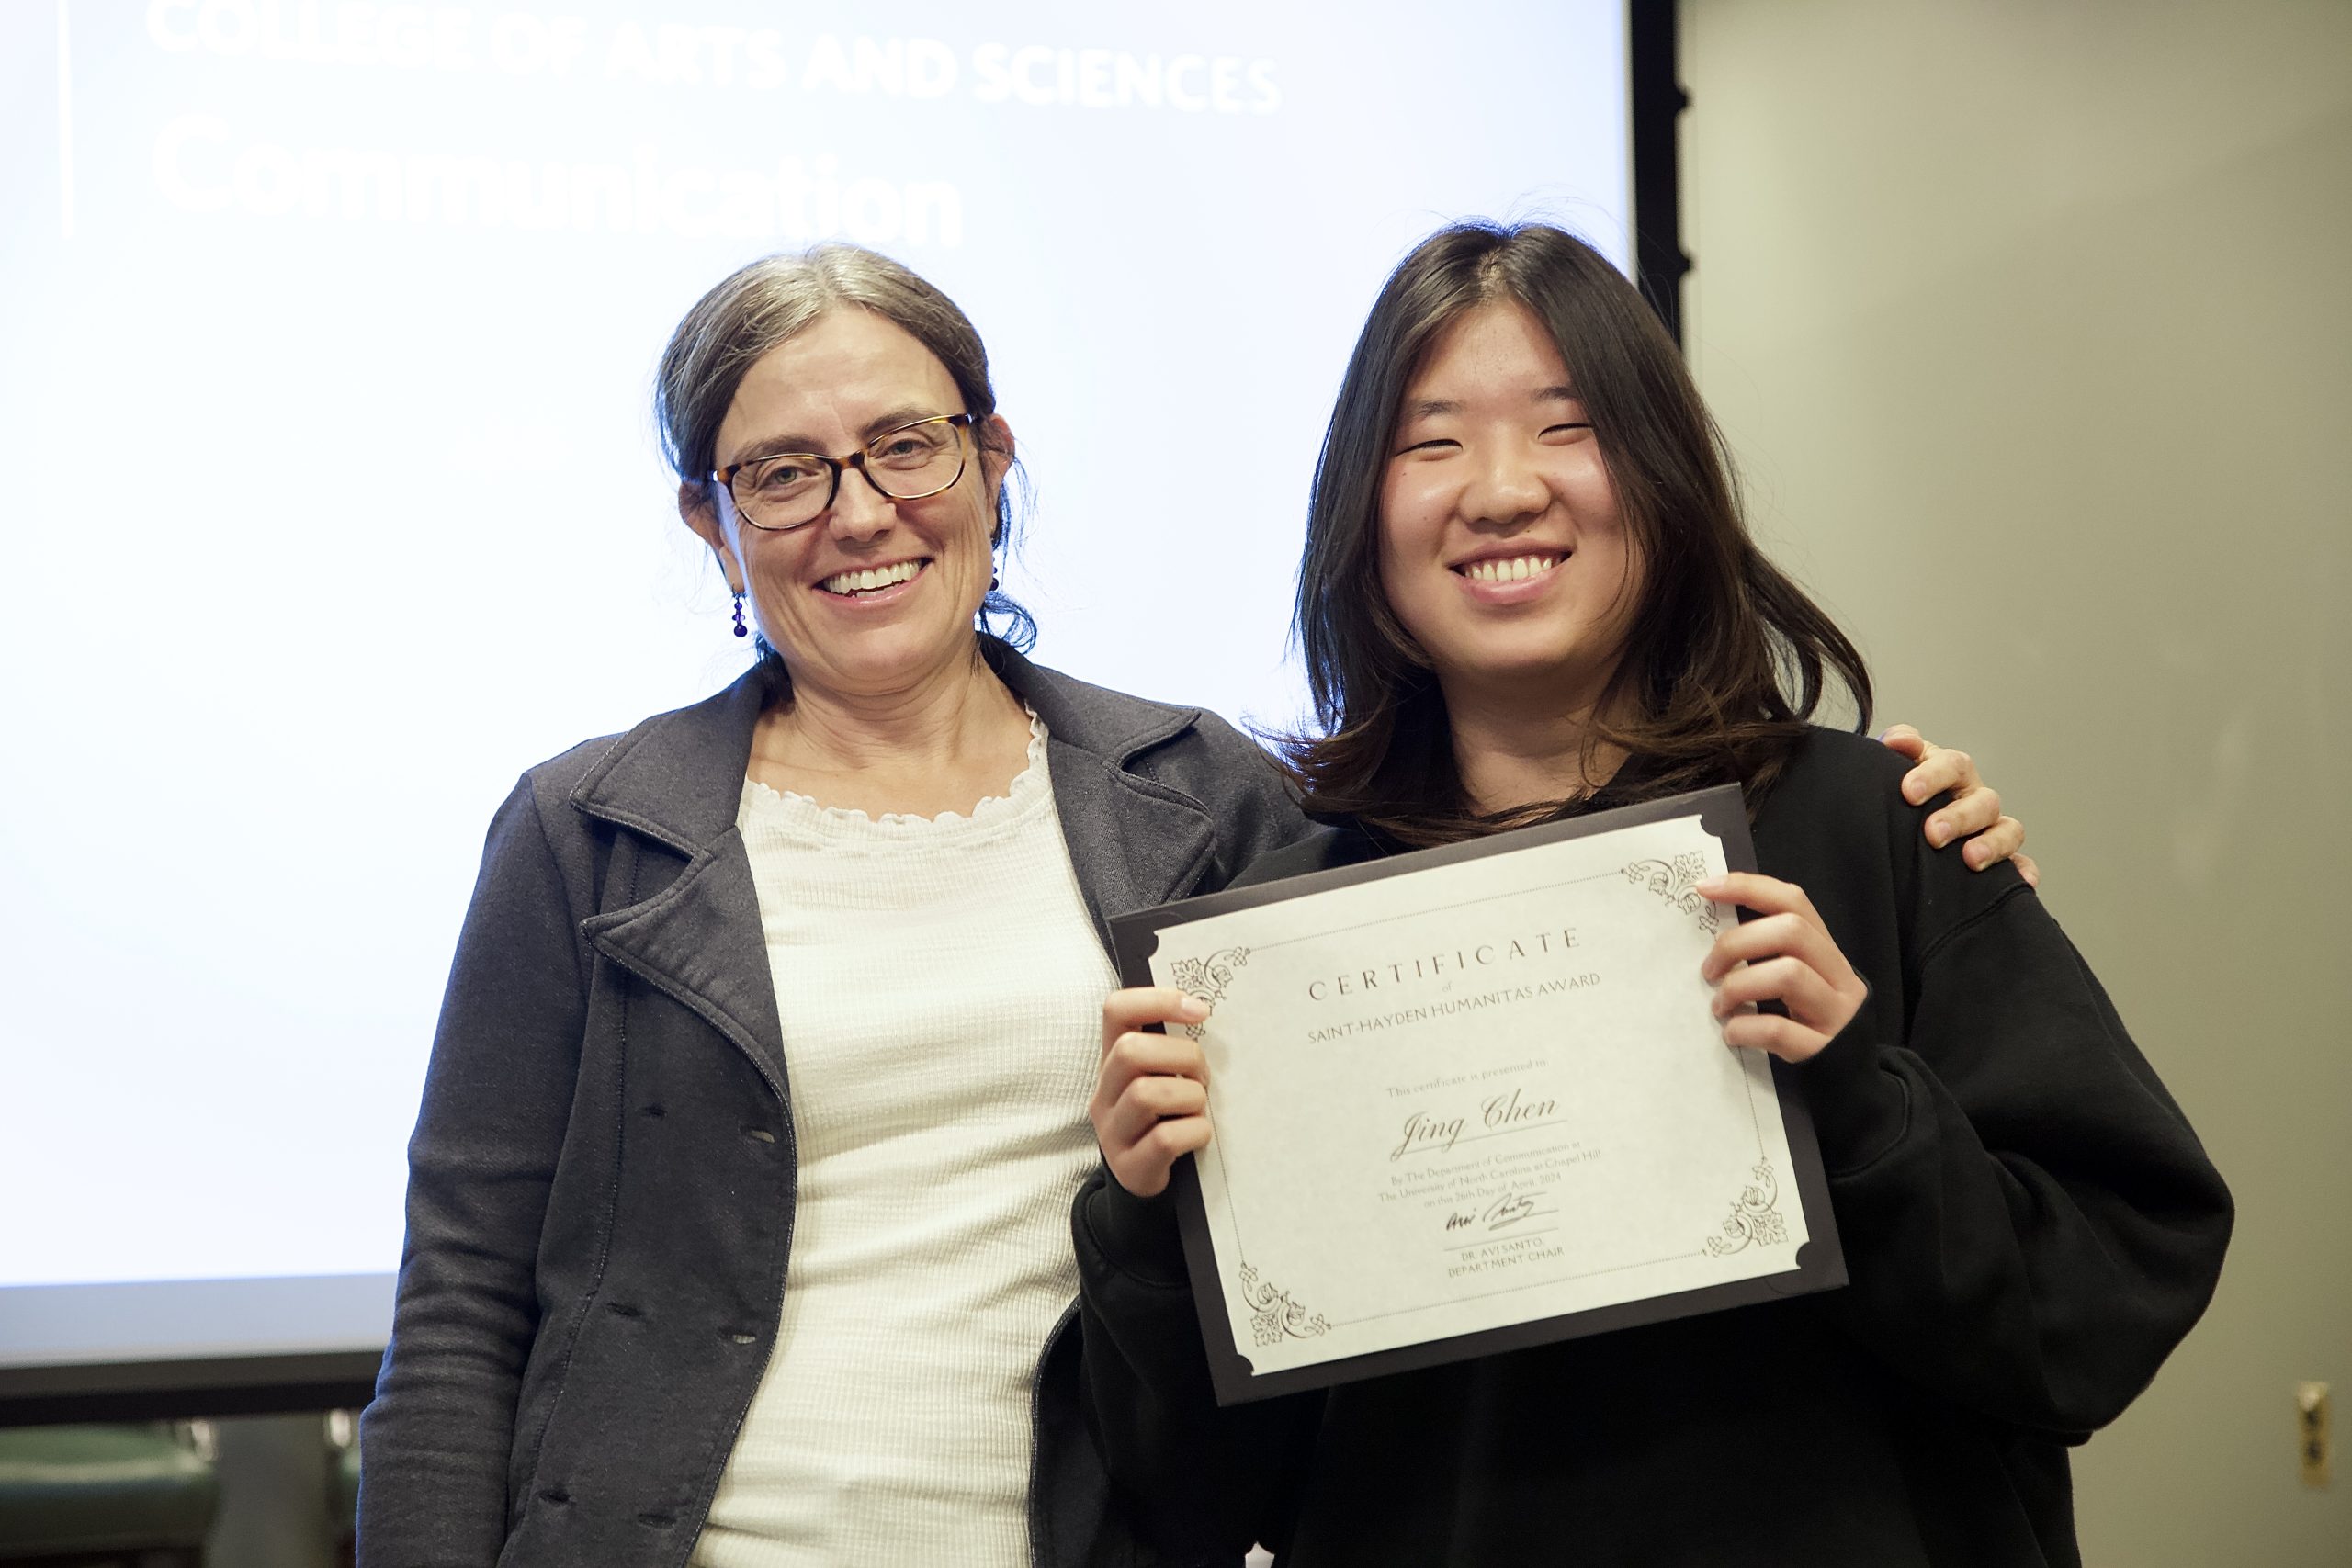 Saint-Hayden Humanitas Award Presented to Jing Chen by Julia Haslett